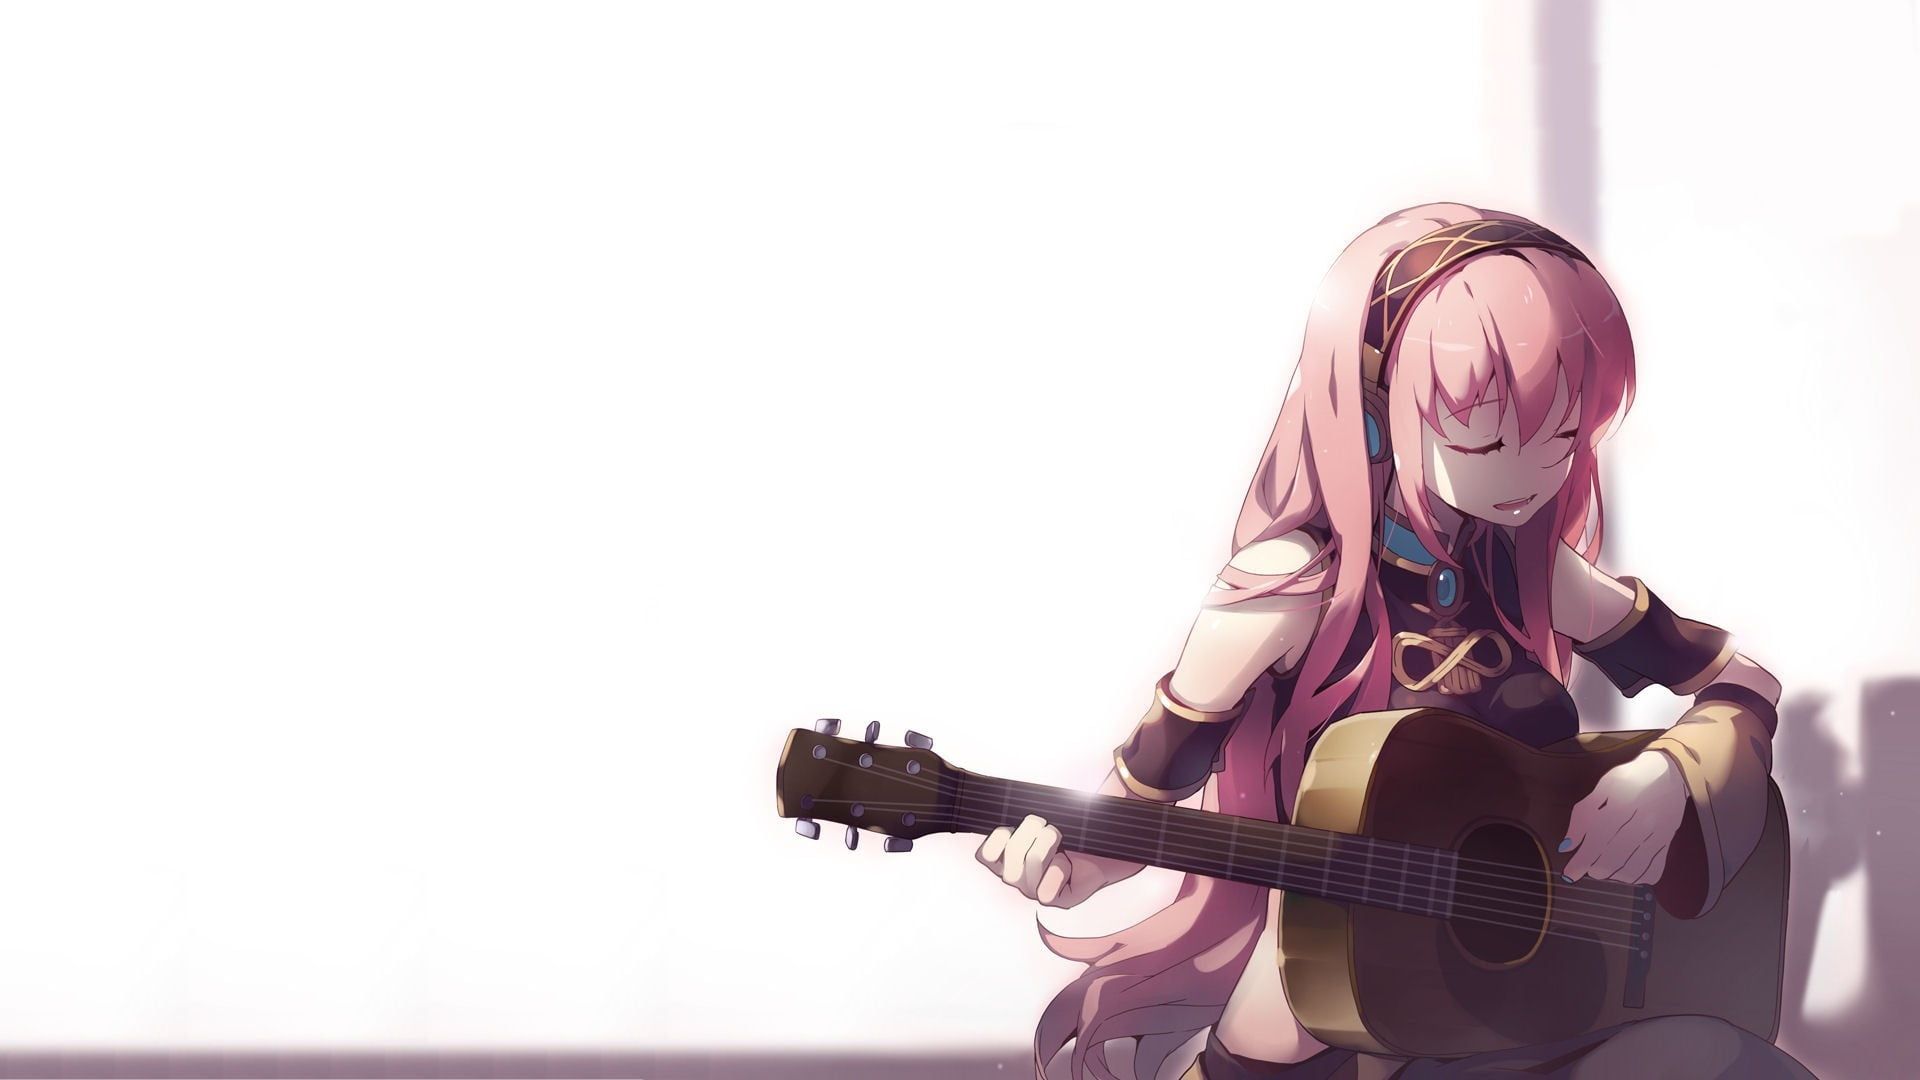 Pink haired anime girl playing guitar illustration, anime girls